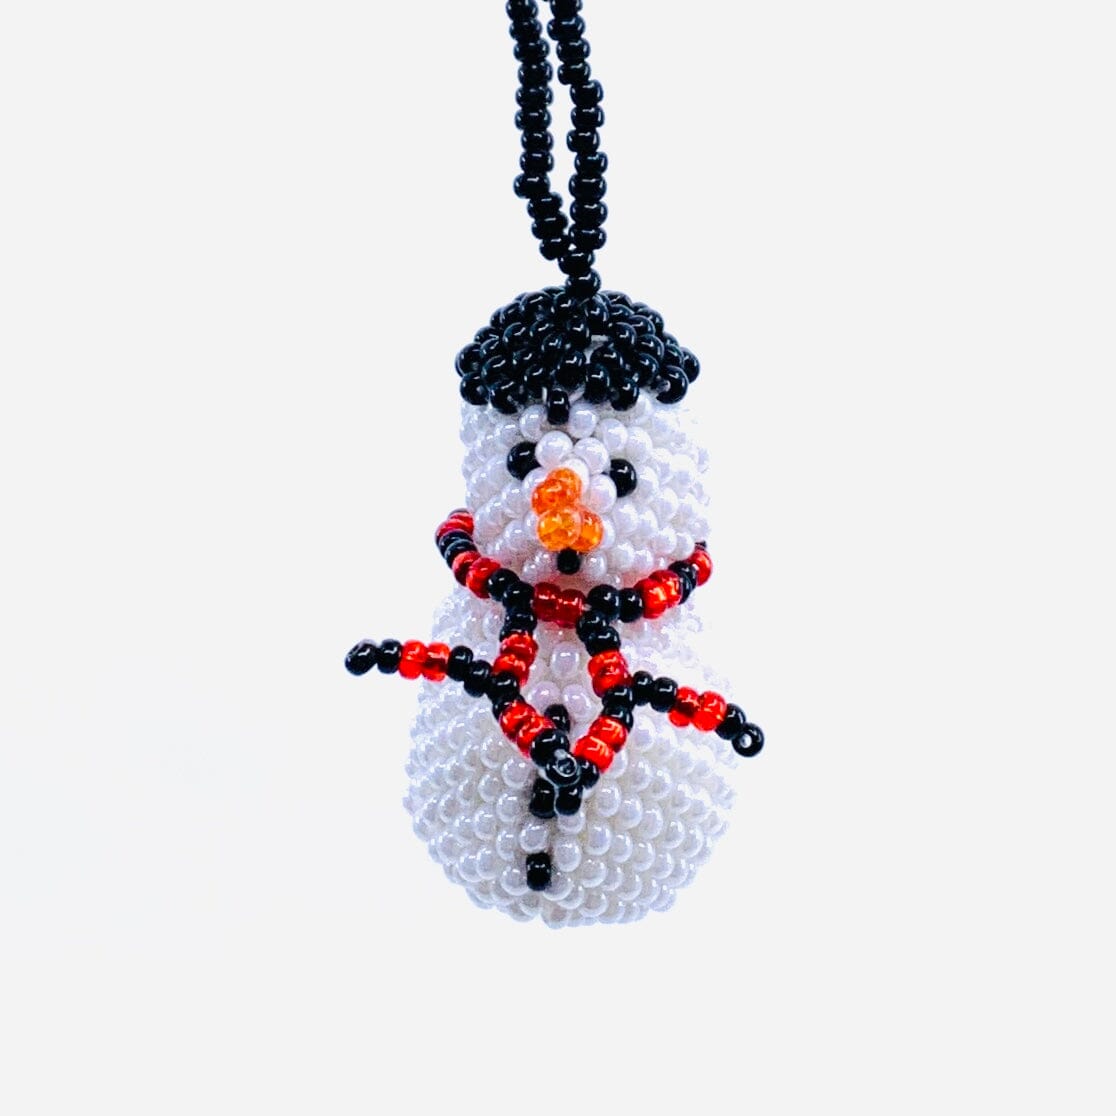 Beaded Christmas Ornament 3, Snowman Ornament Pichincha 